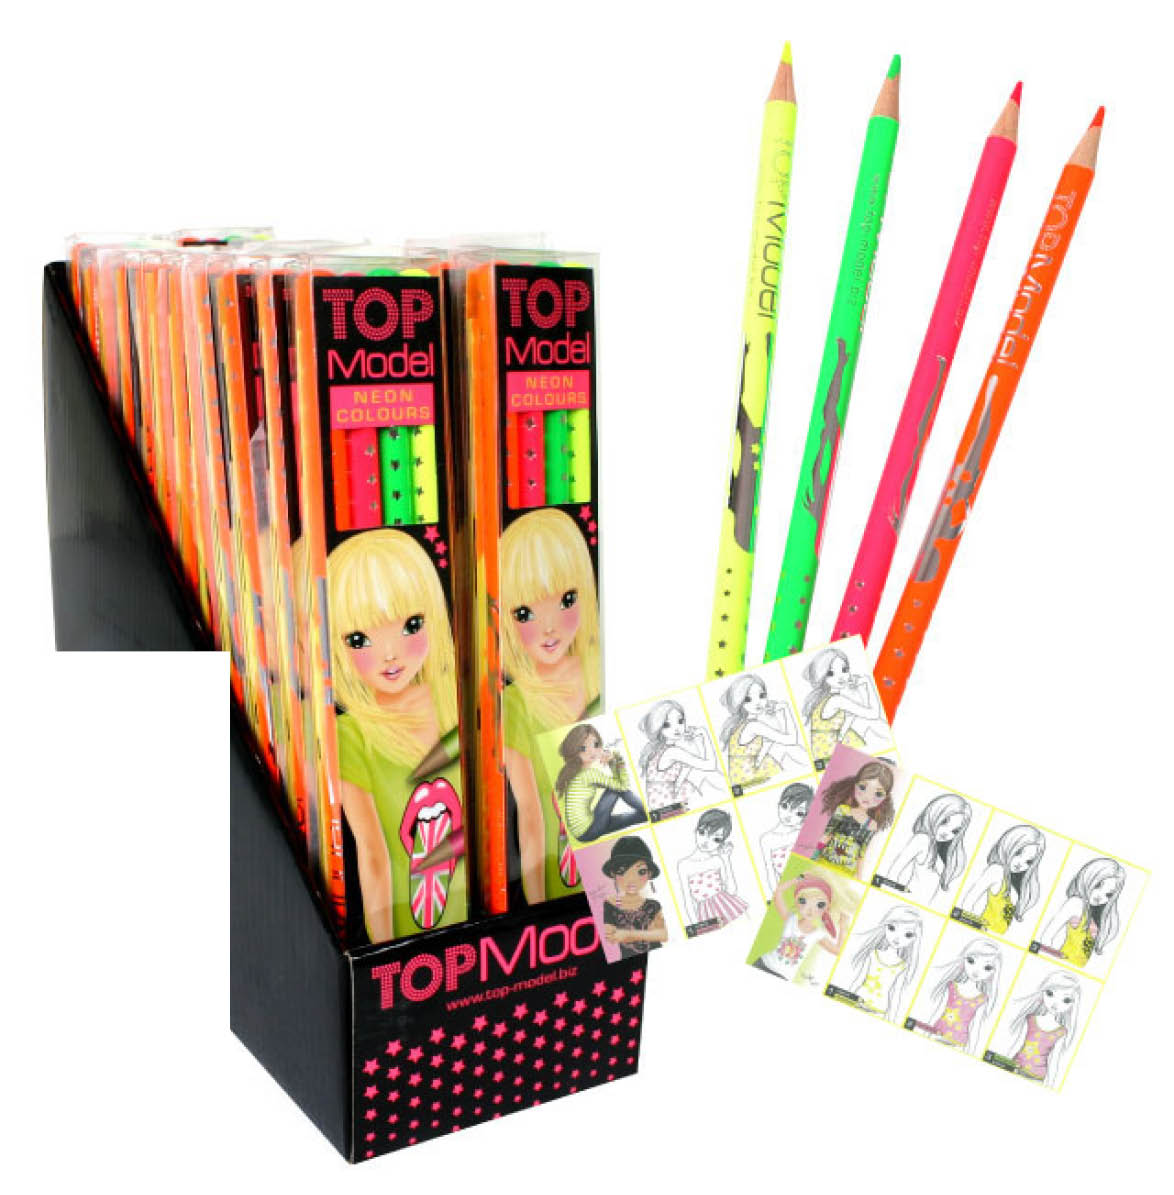 Top Model Neon Coloured Pencils